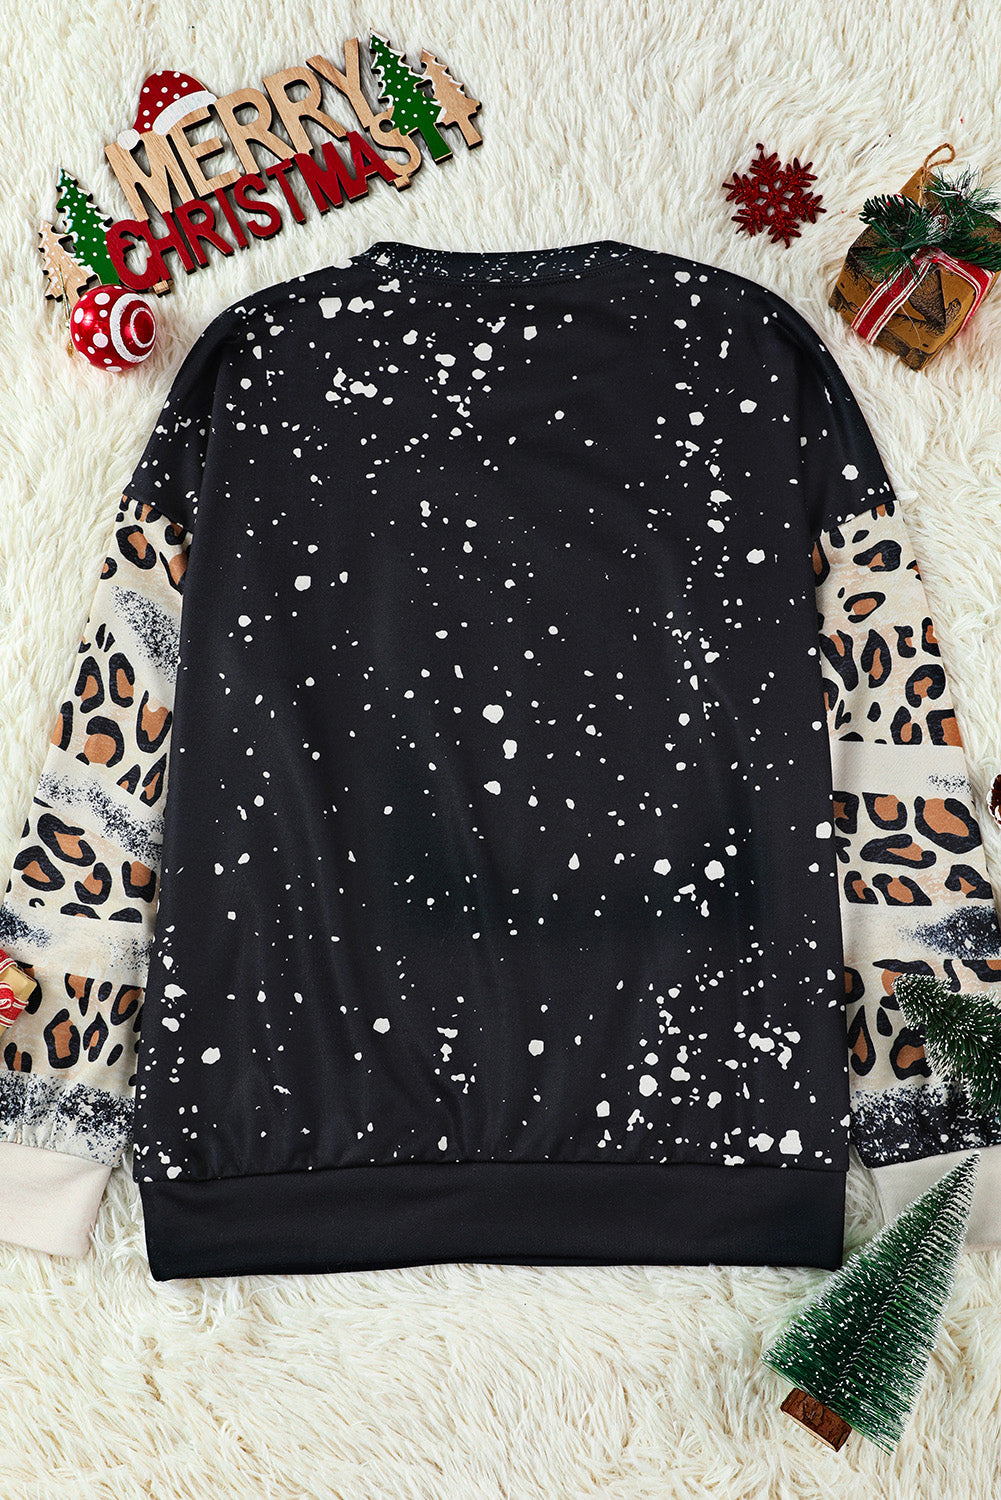 Black Believe Santa Claus Casual Christmas Graphic Sweatshirt